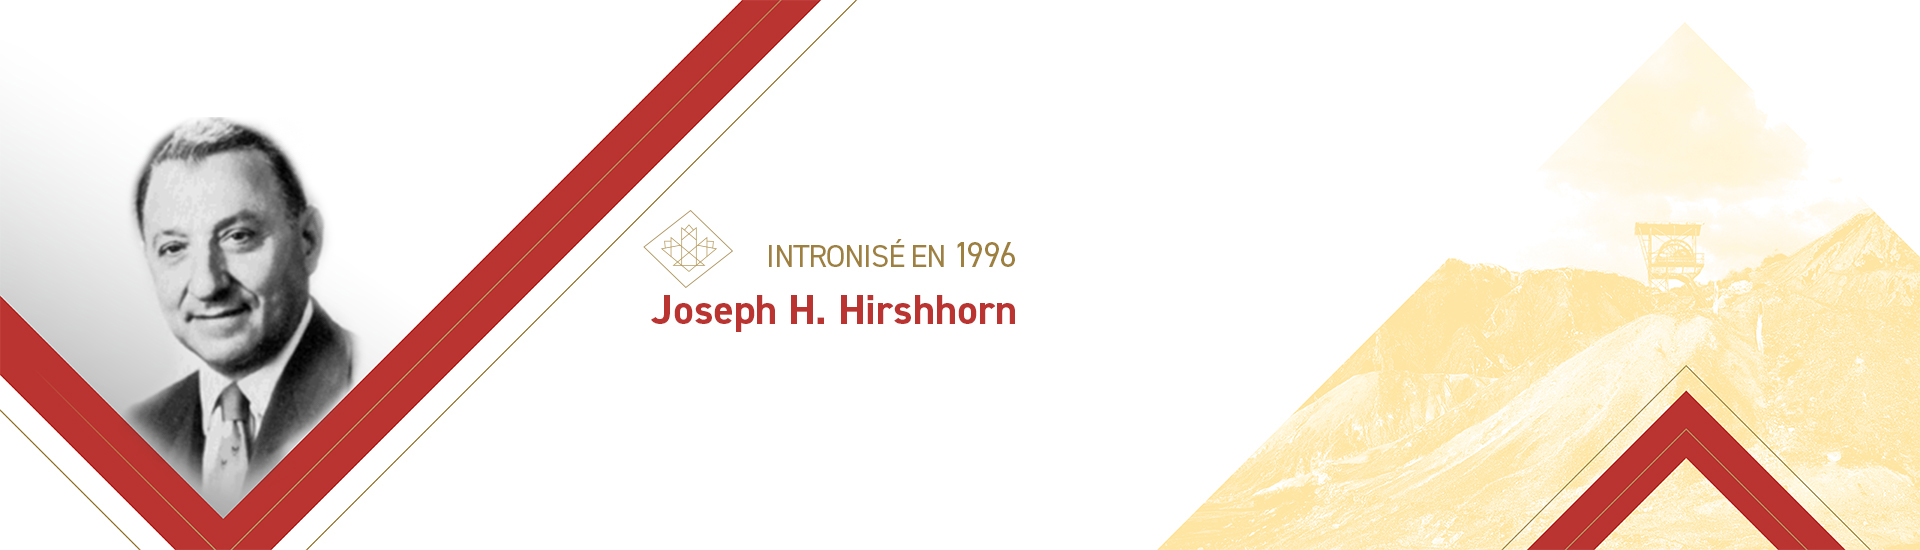 Joseph H. Hirshhorn (1900-1981)